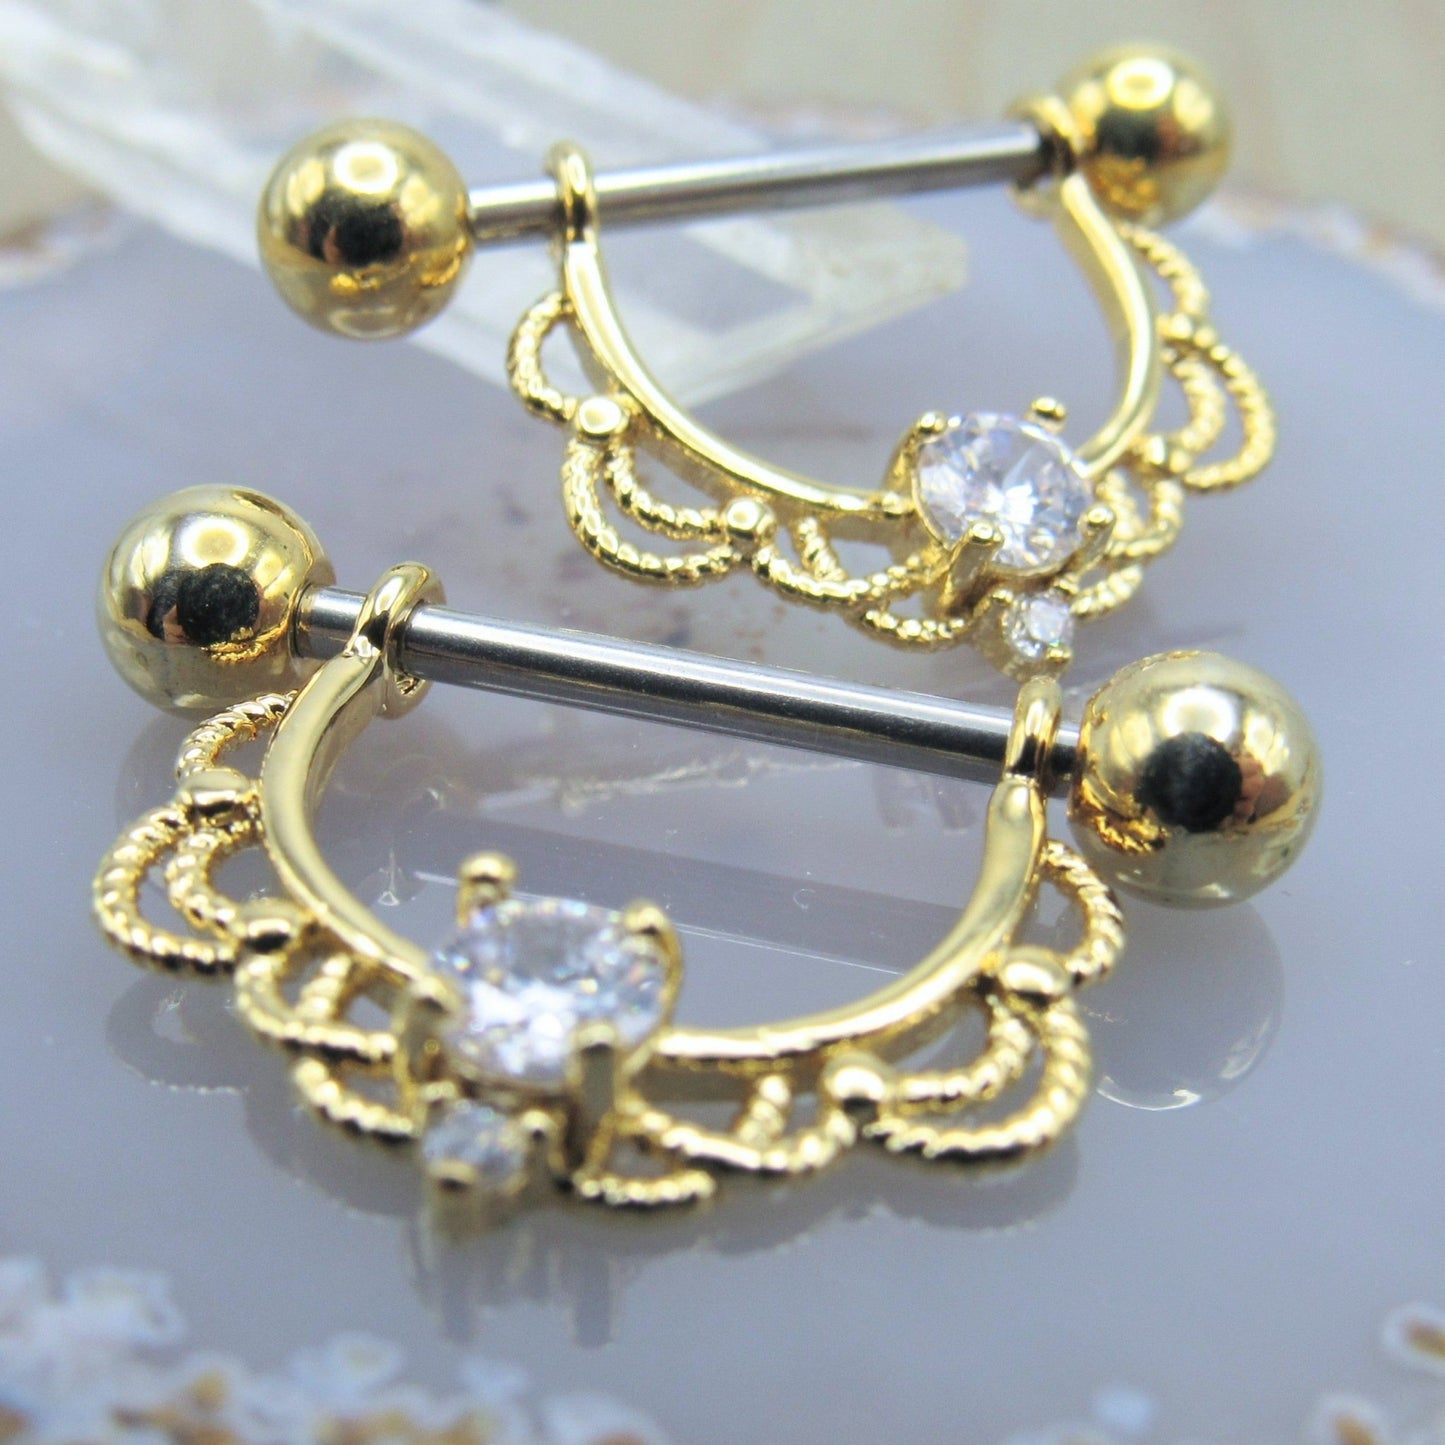 Yellow gold nipple piercing cz clear gemstone ornate hanger set 14g 5/8" length externally threaded stainless steel bars set - Siren Body Jewelry